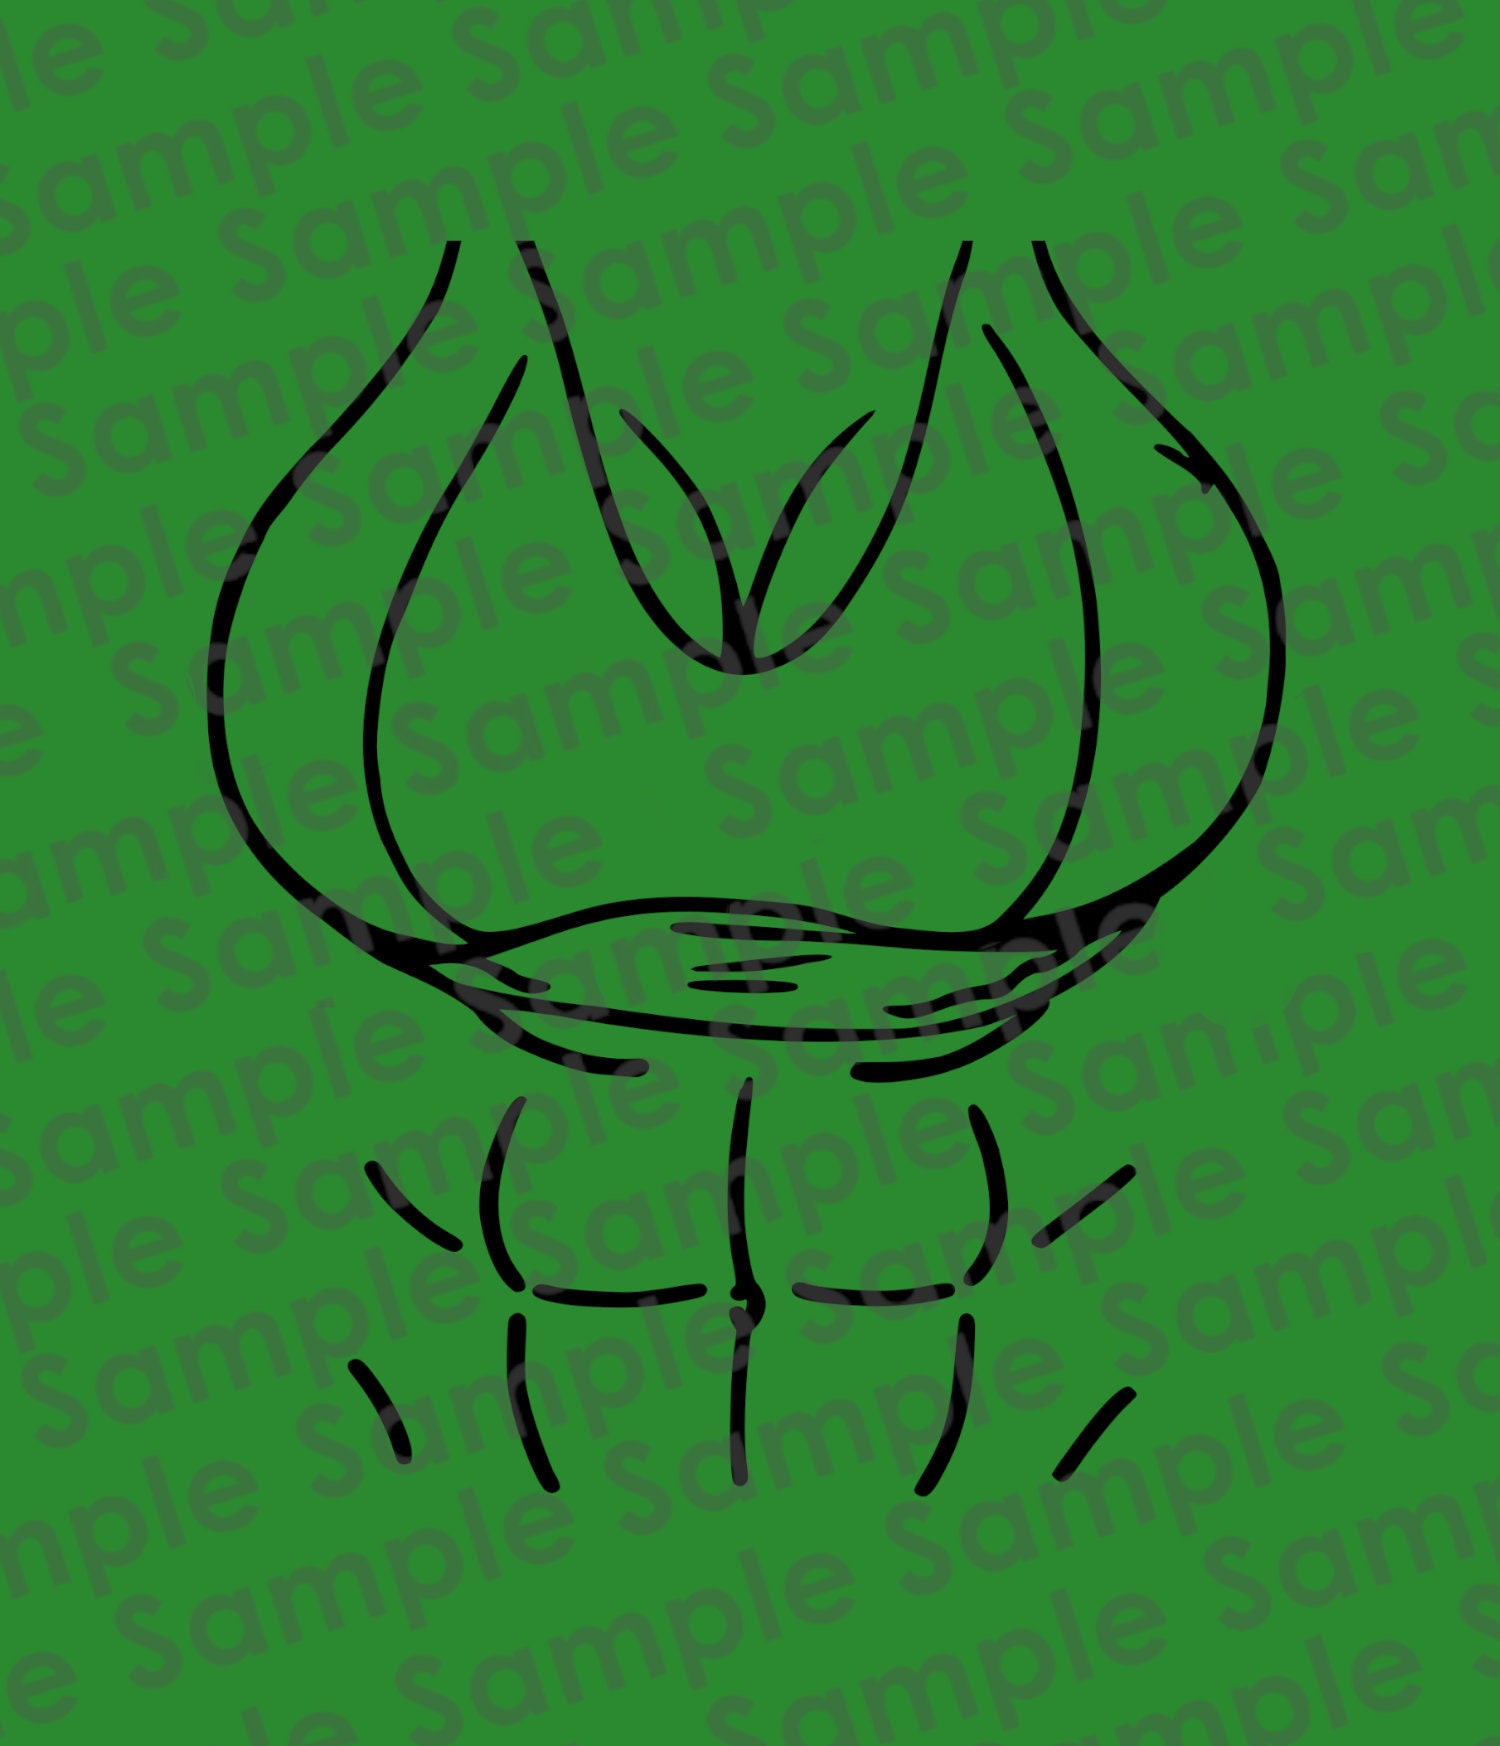 T-shirt Rectus abdominis muscle Hulk Comics, T-shirt, love, tshirt png